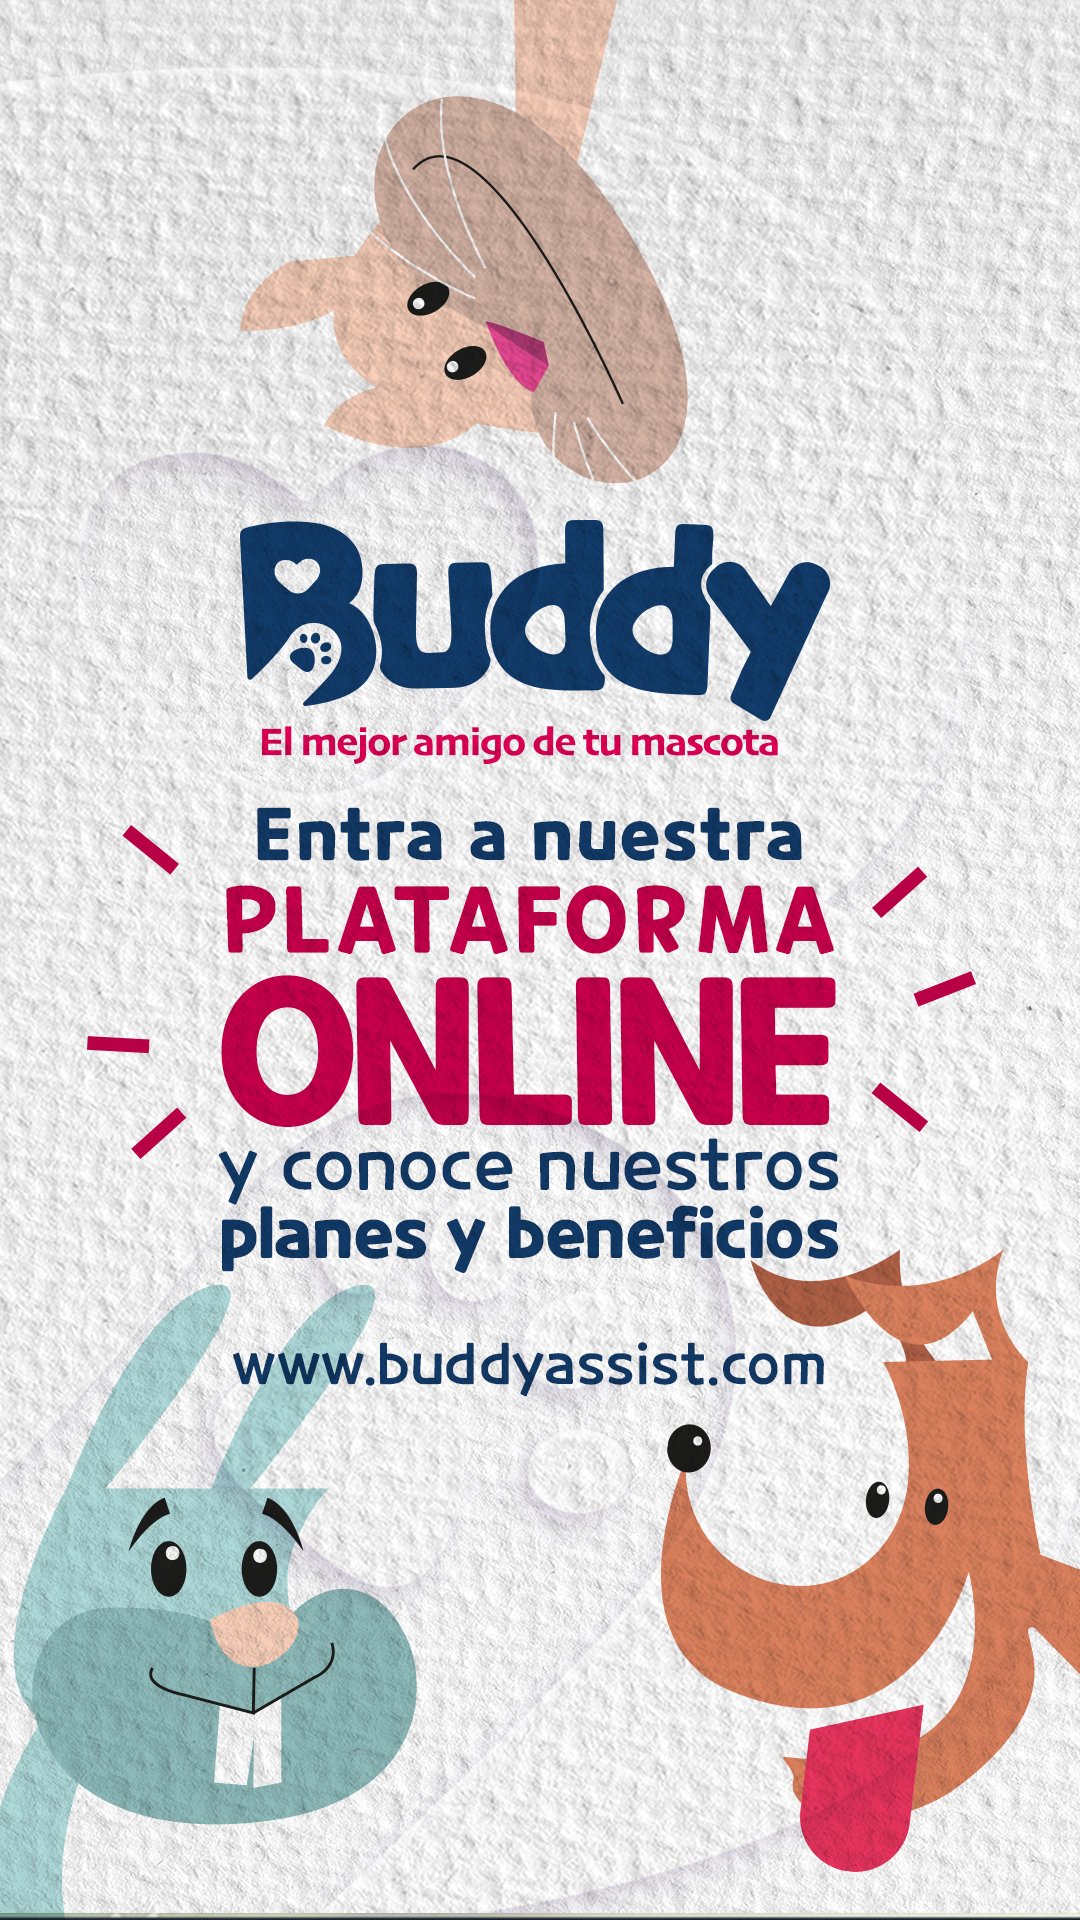 Buddy story beneficios ONLINE